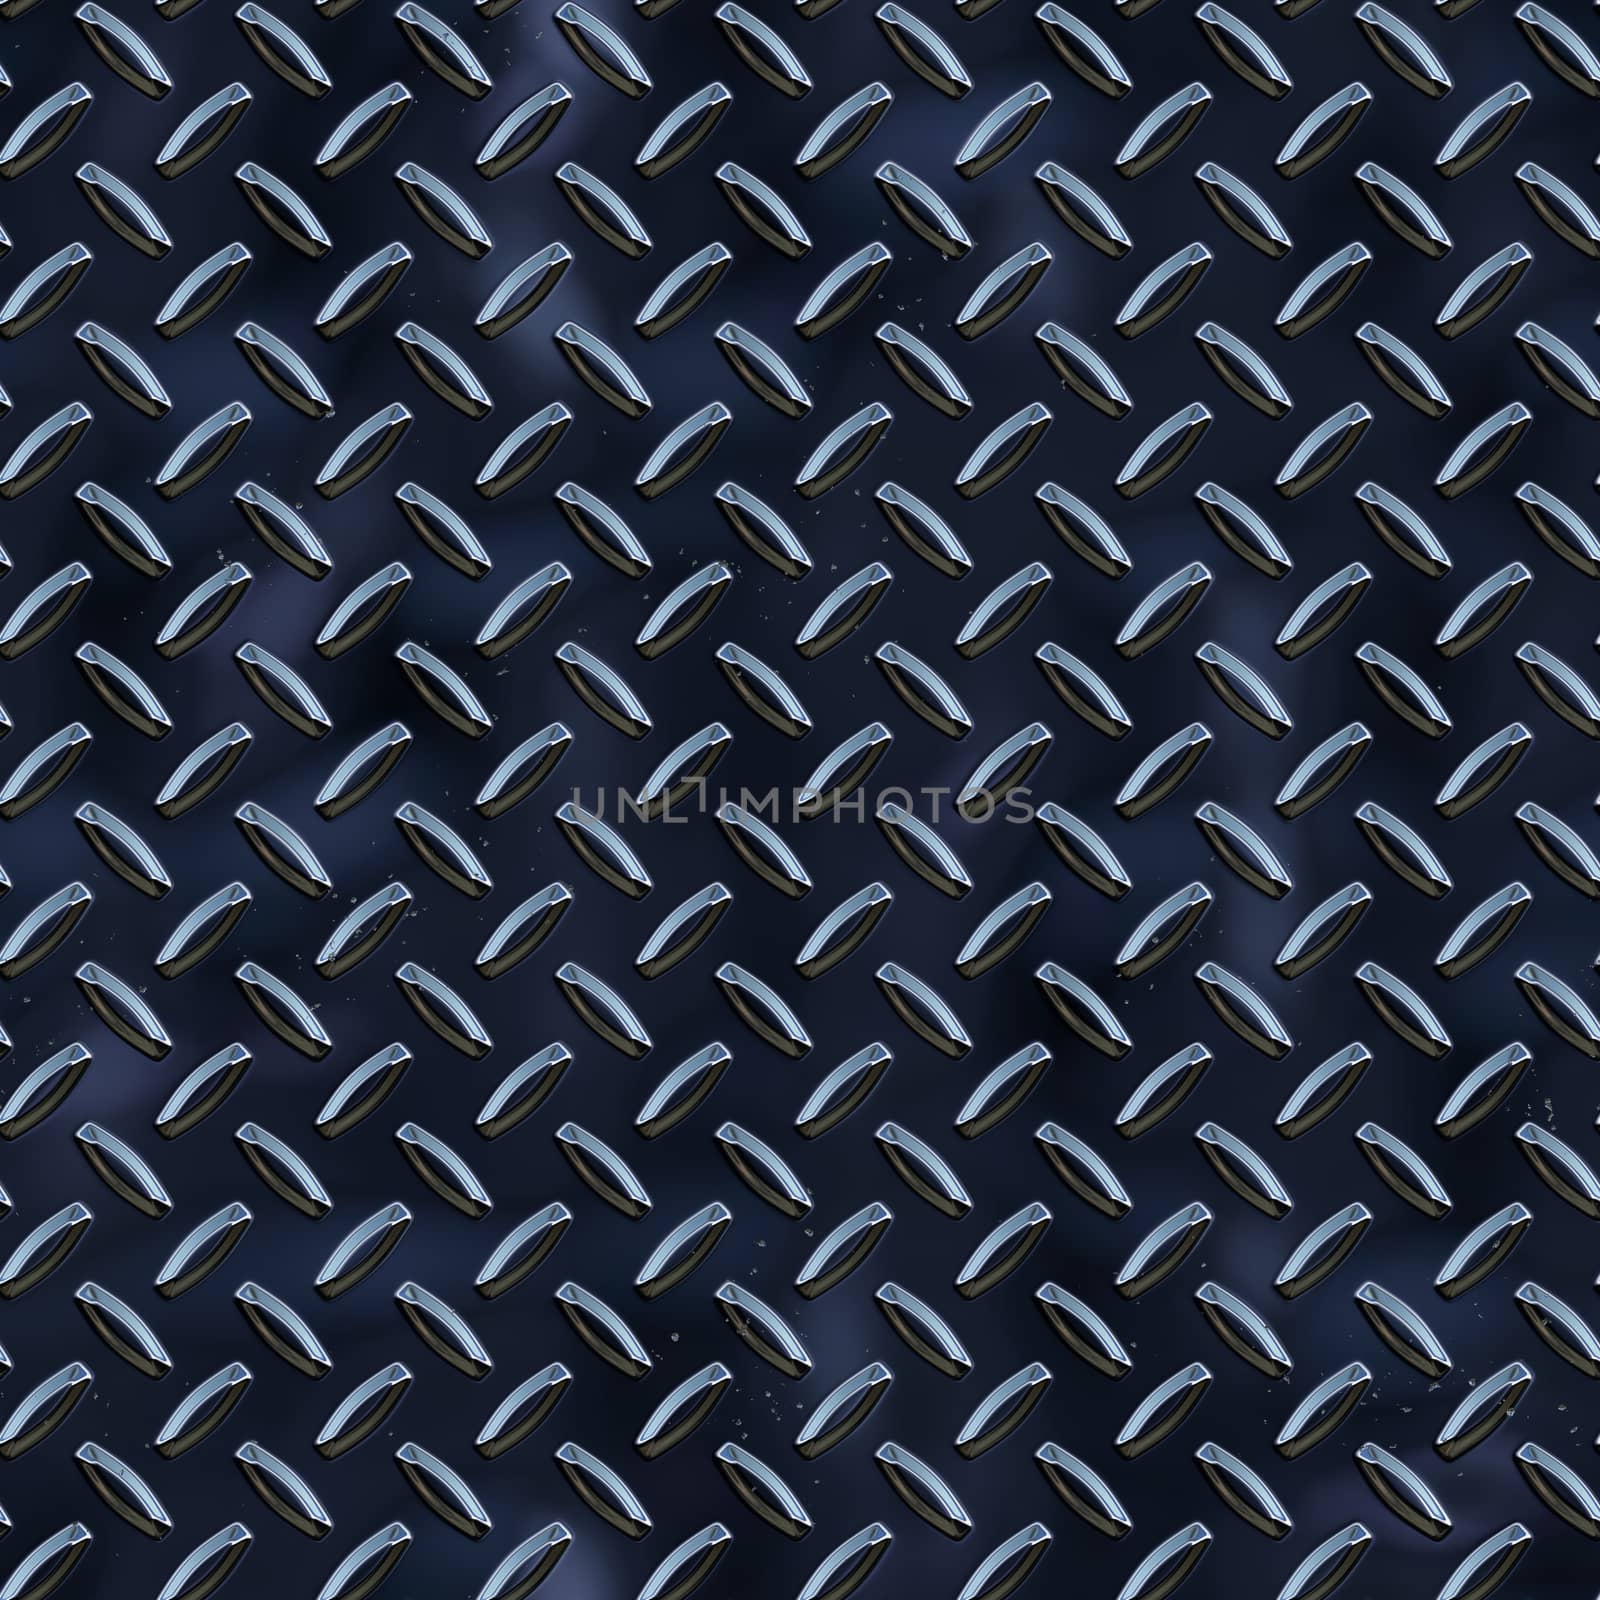 Blue black diamond shiny metal plate seamless pattern, or texture.